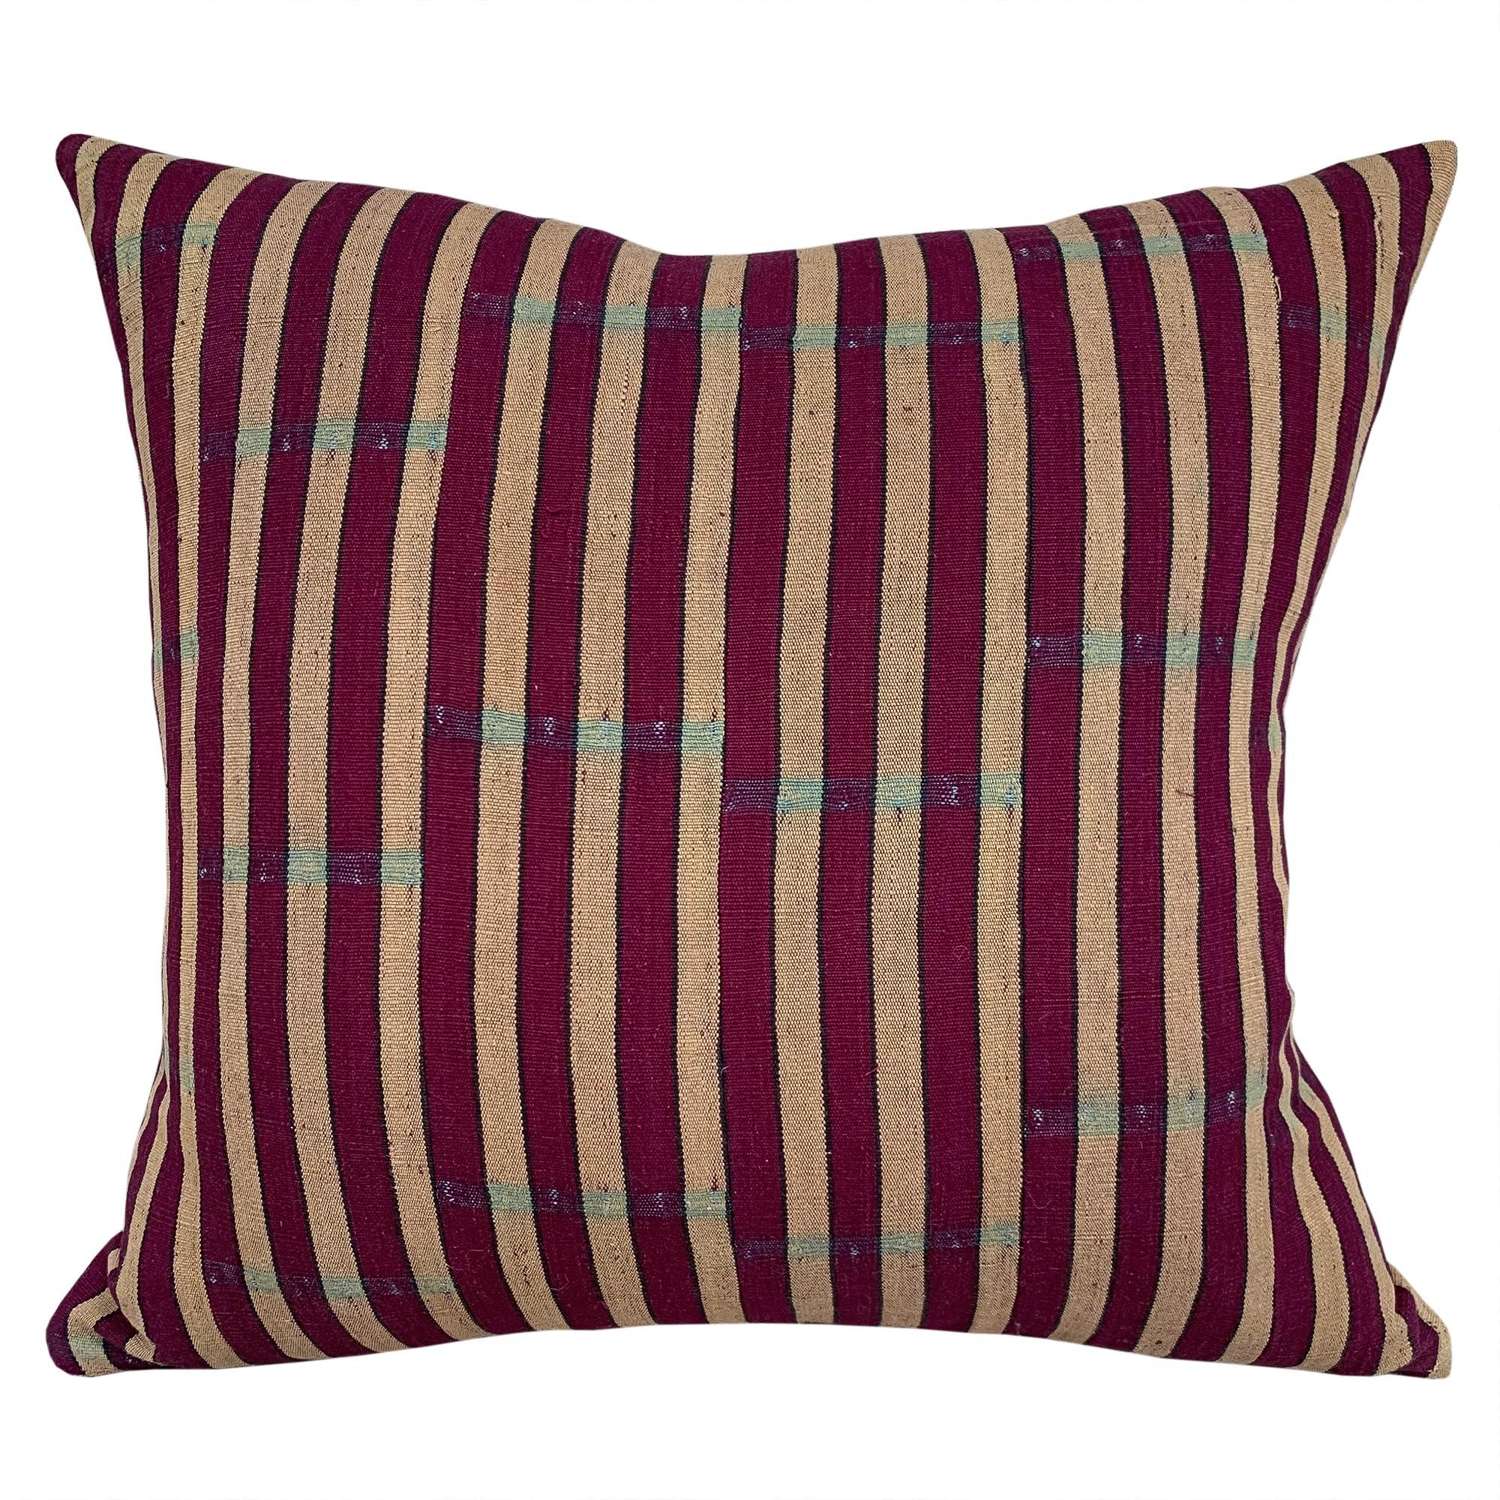 Yoruba striped cushions